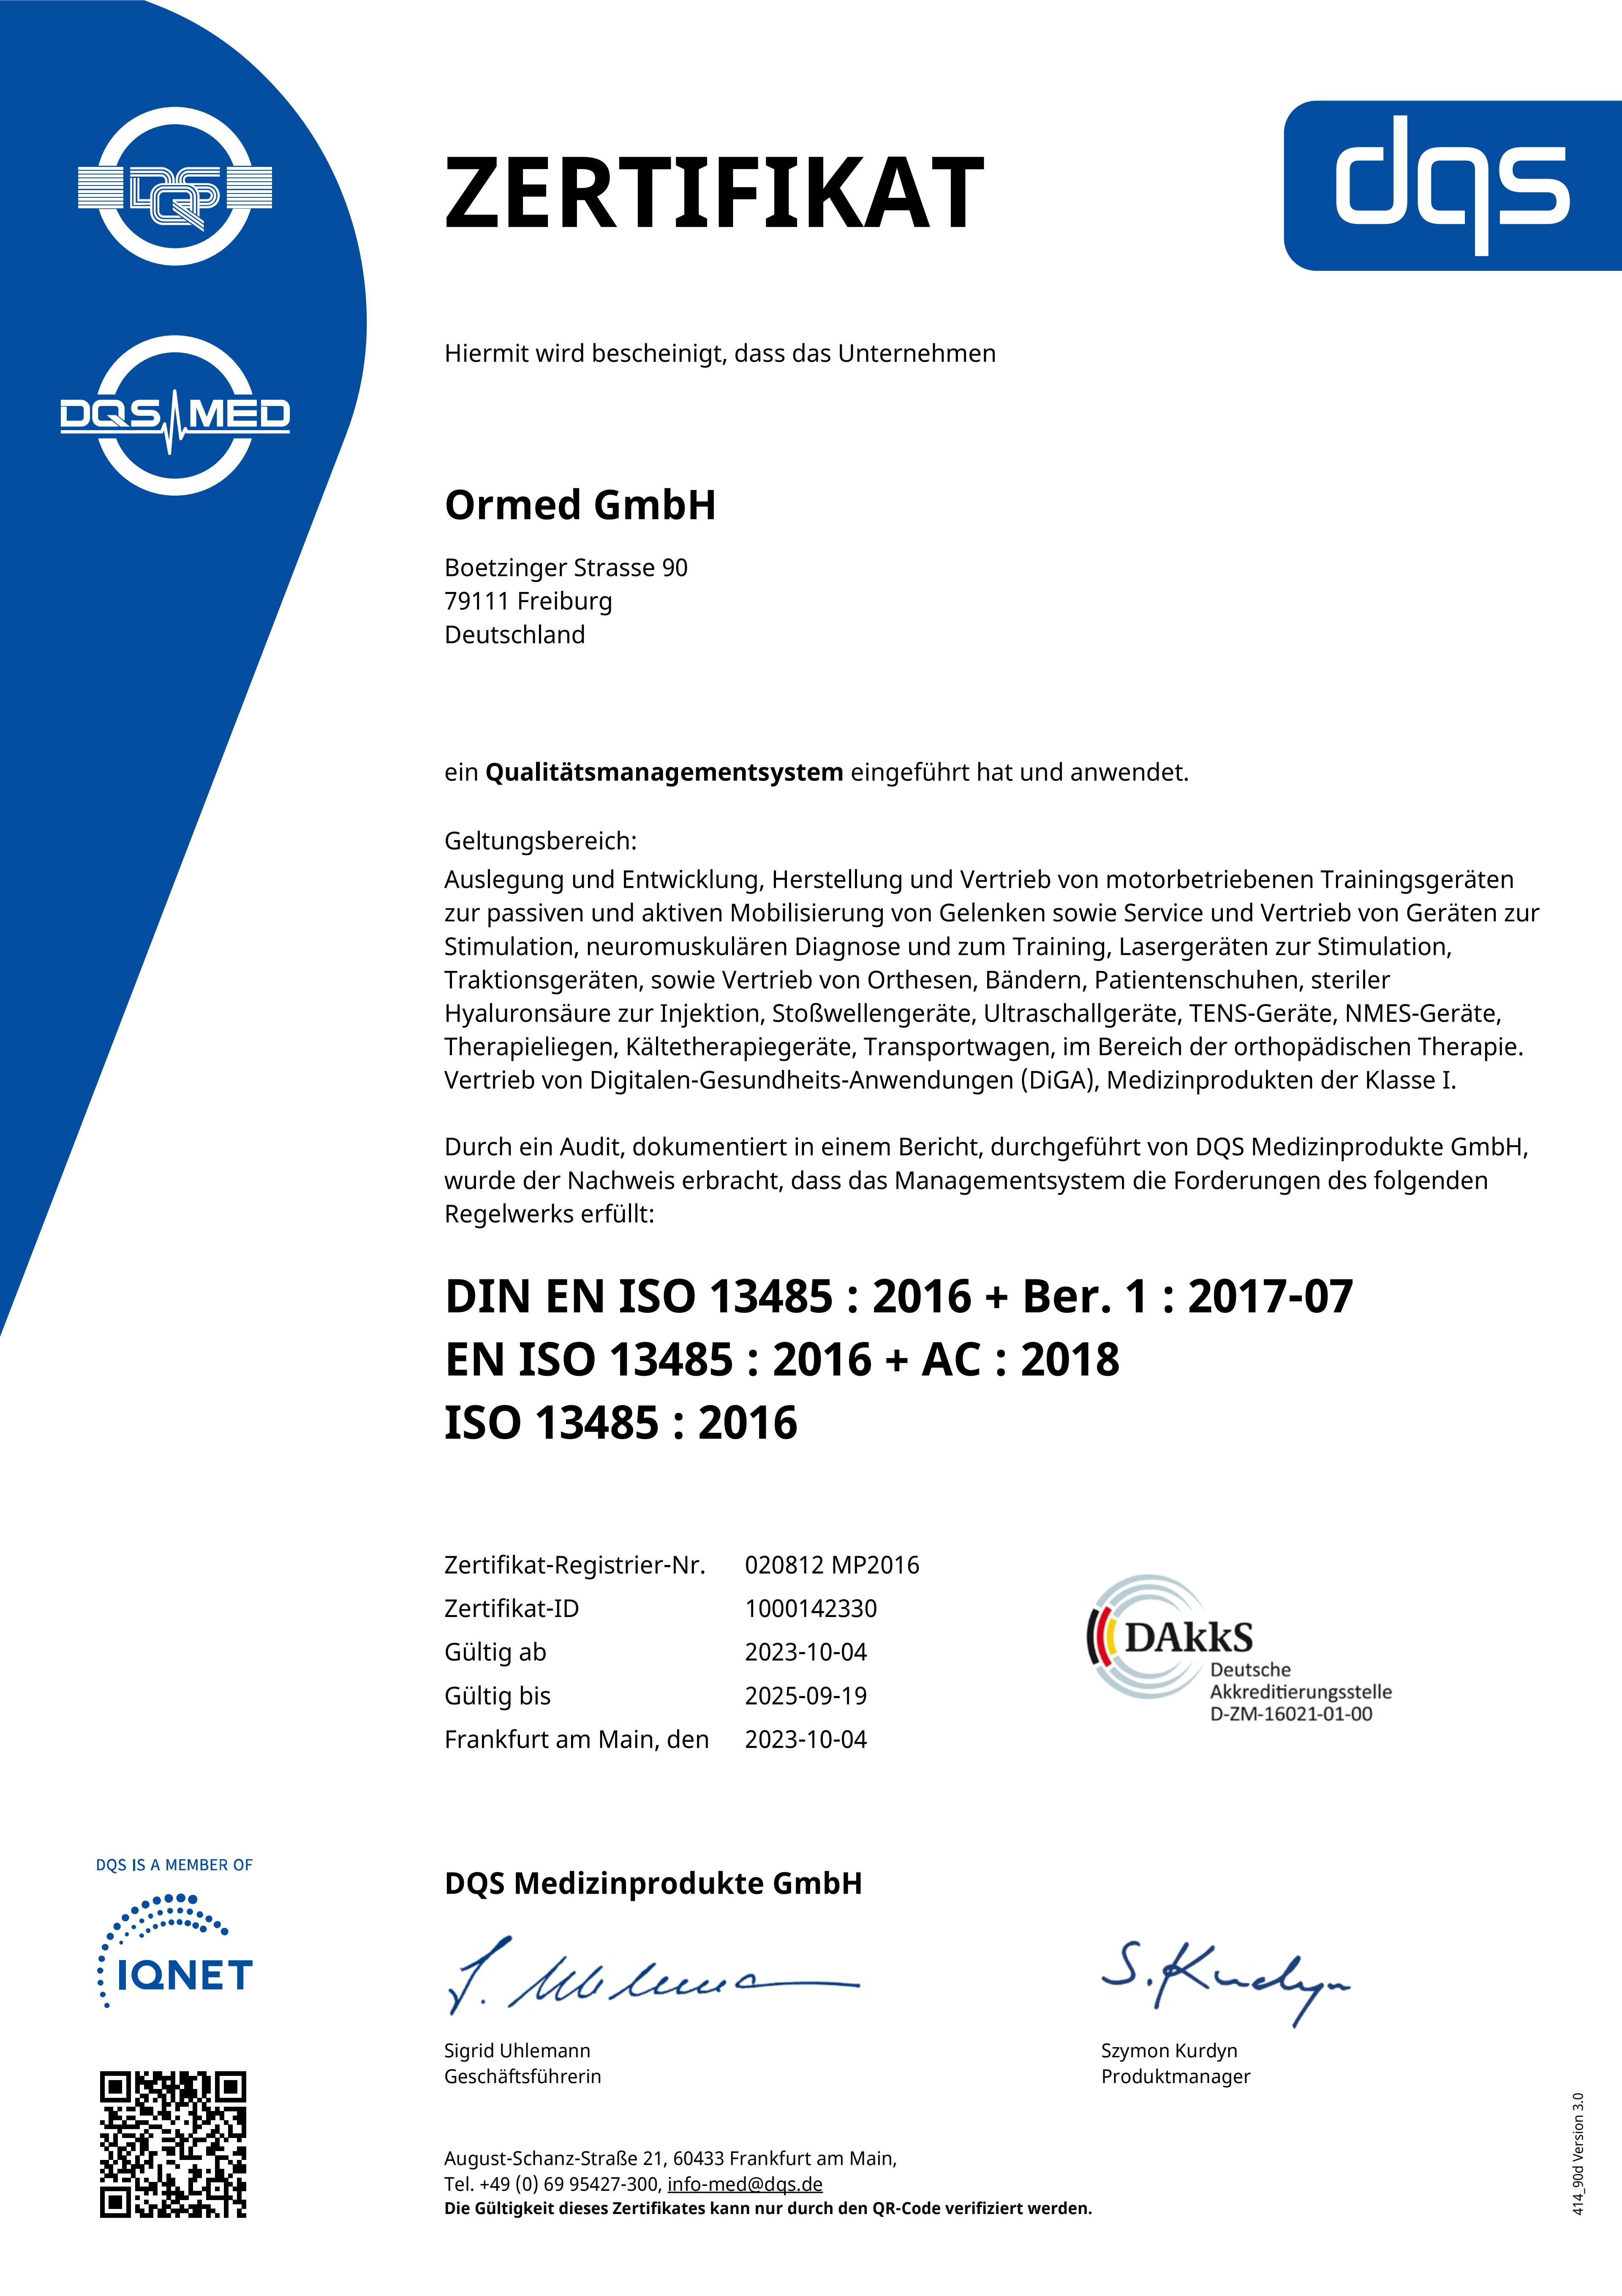 020812 - Ormed GmbH - CERTIFICATE - deutsch - 2023-10-04 - MP2016.pdf